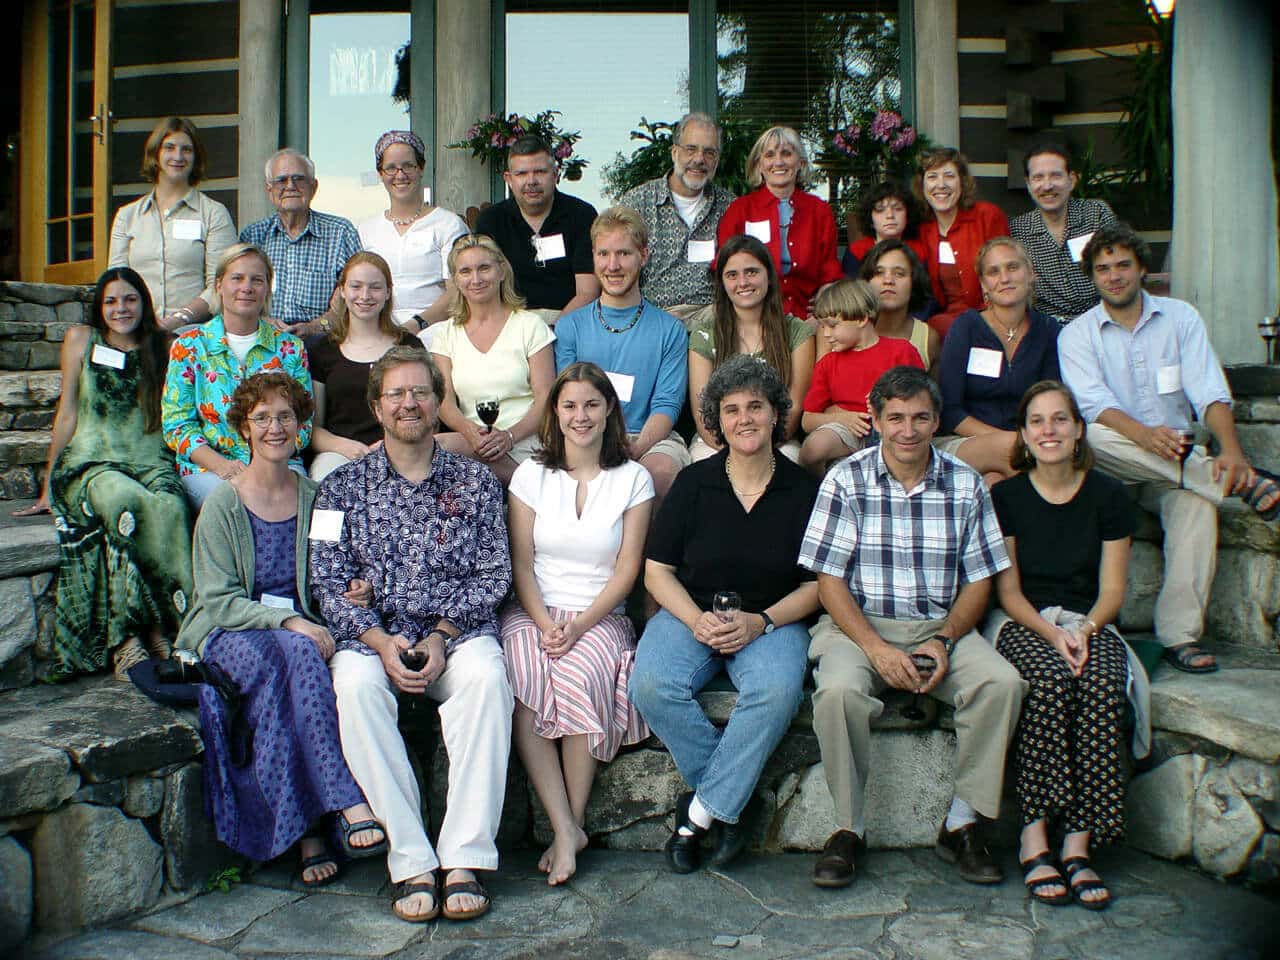 The original 25 member CooperRiis staff hired in 2003